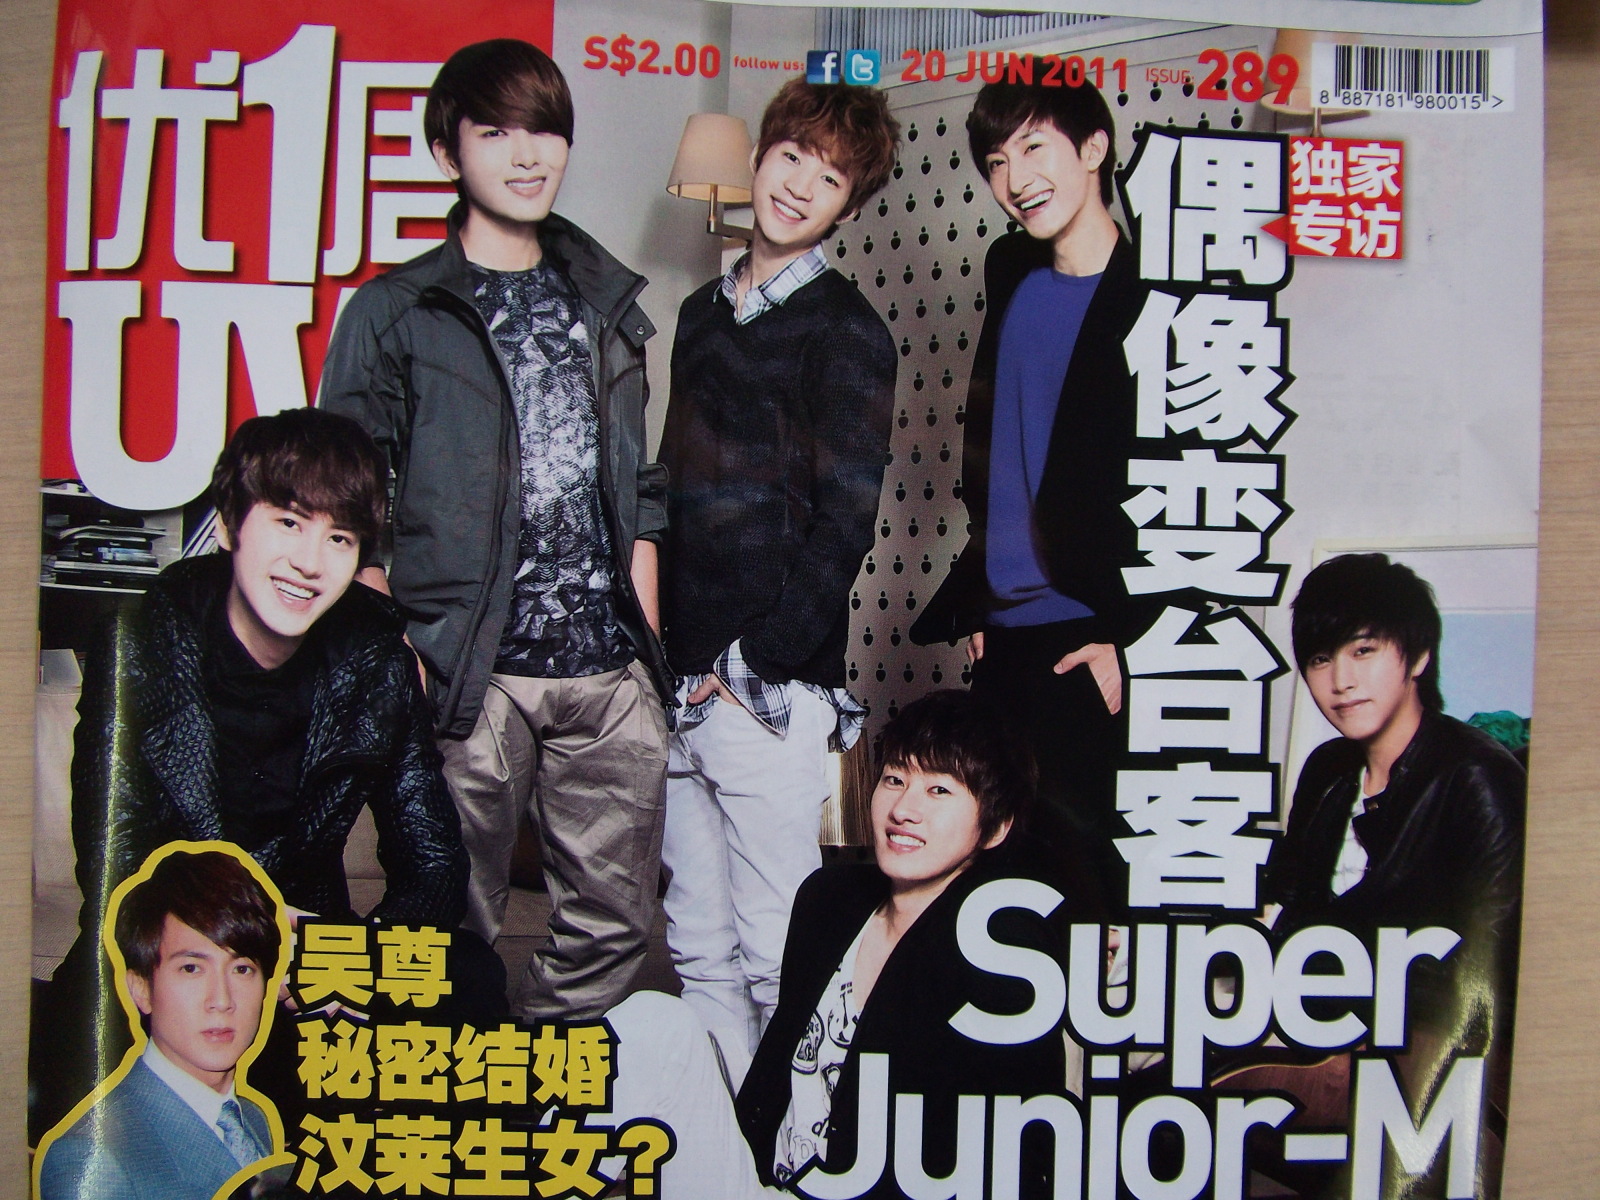 Boy band korea - Super Junior 